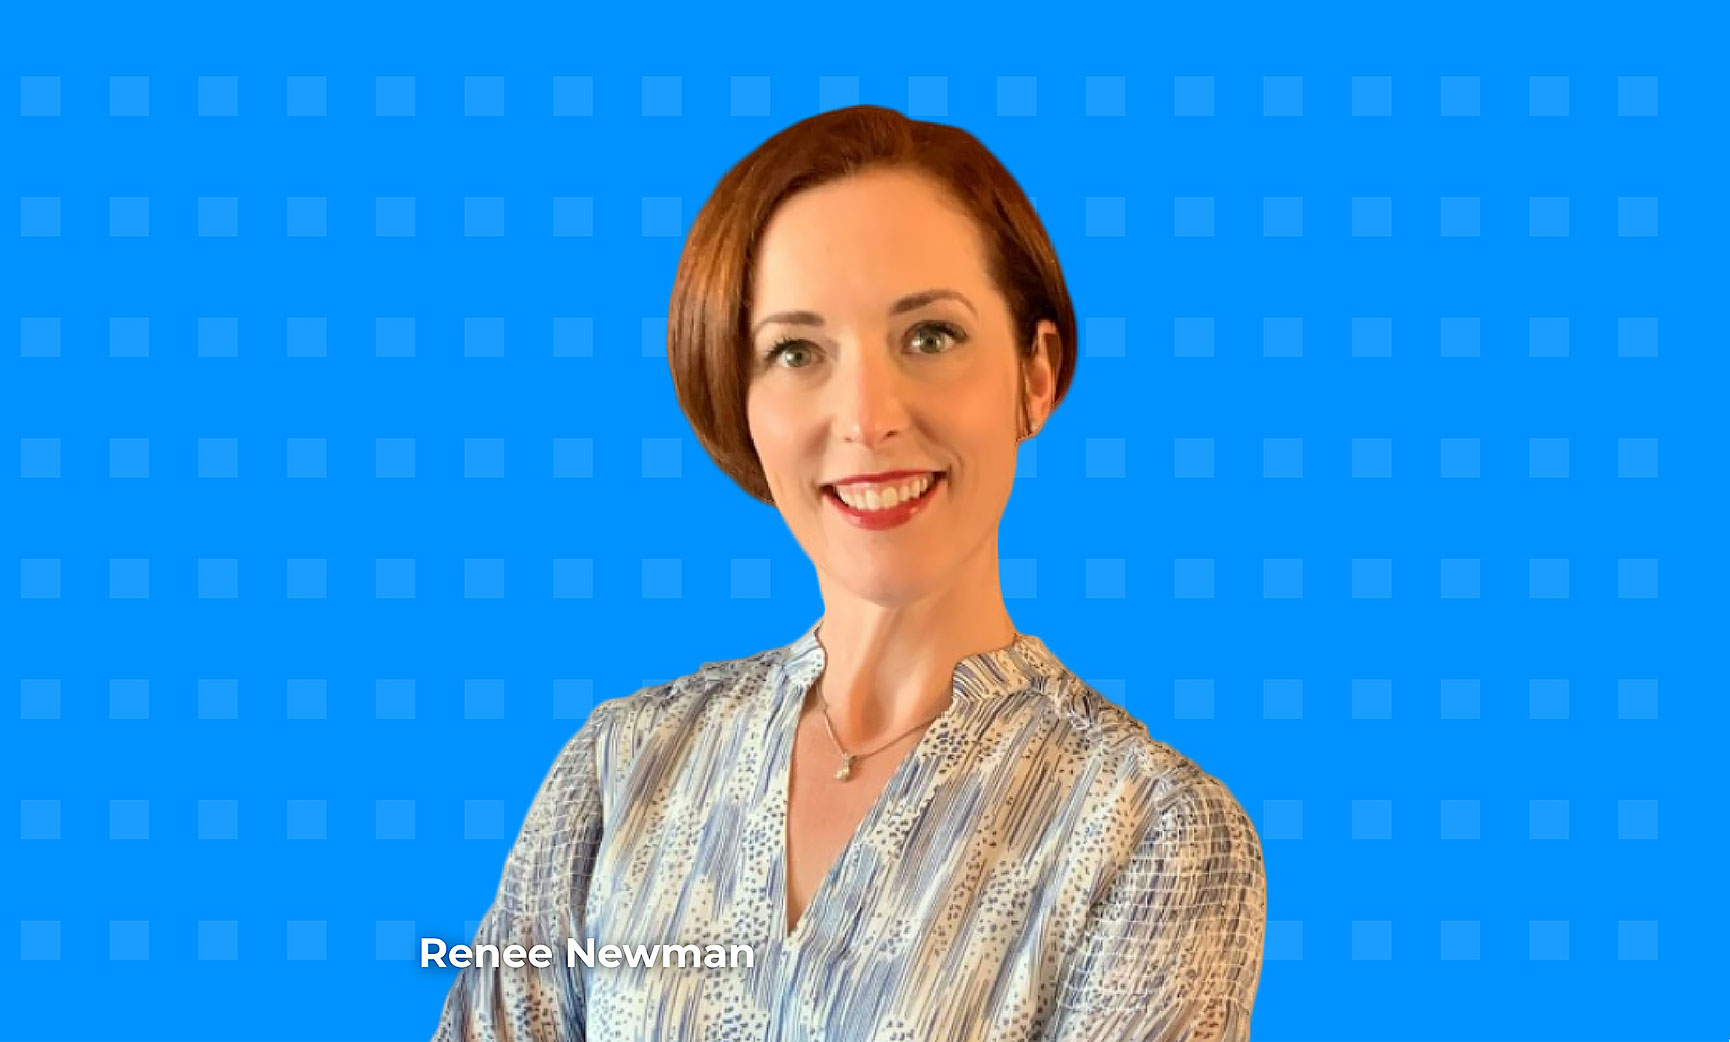 Renee Newman Joins Nymbus Industry Advisory Board